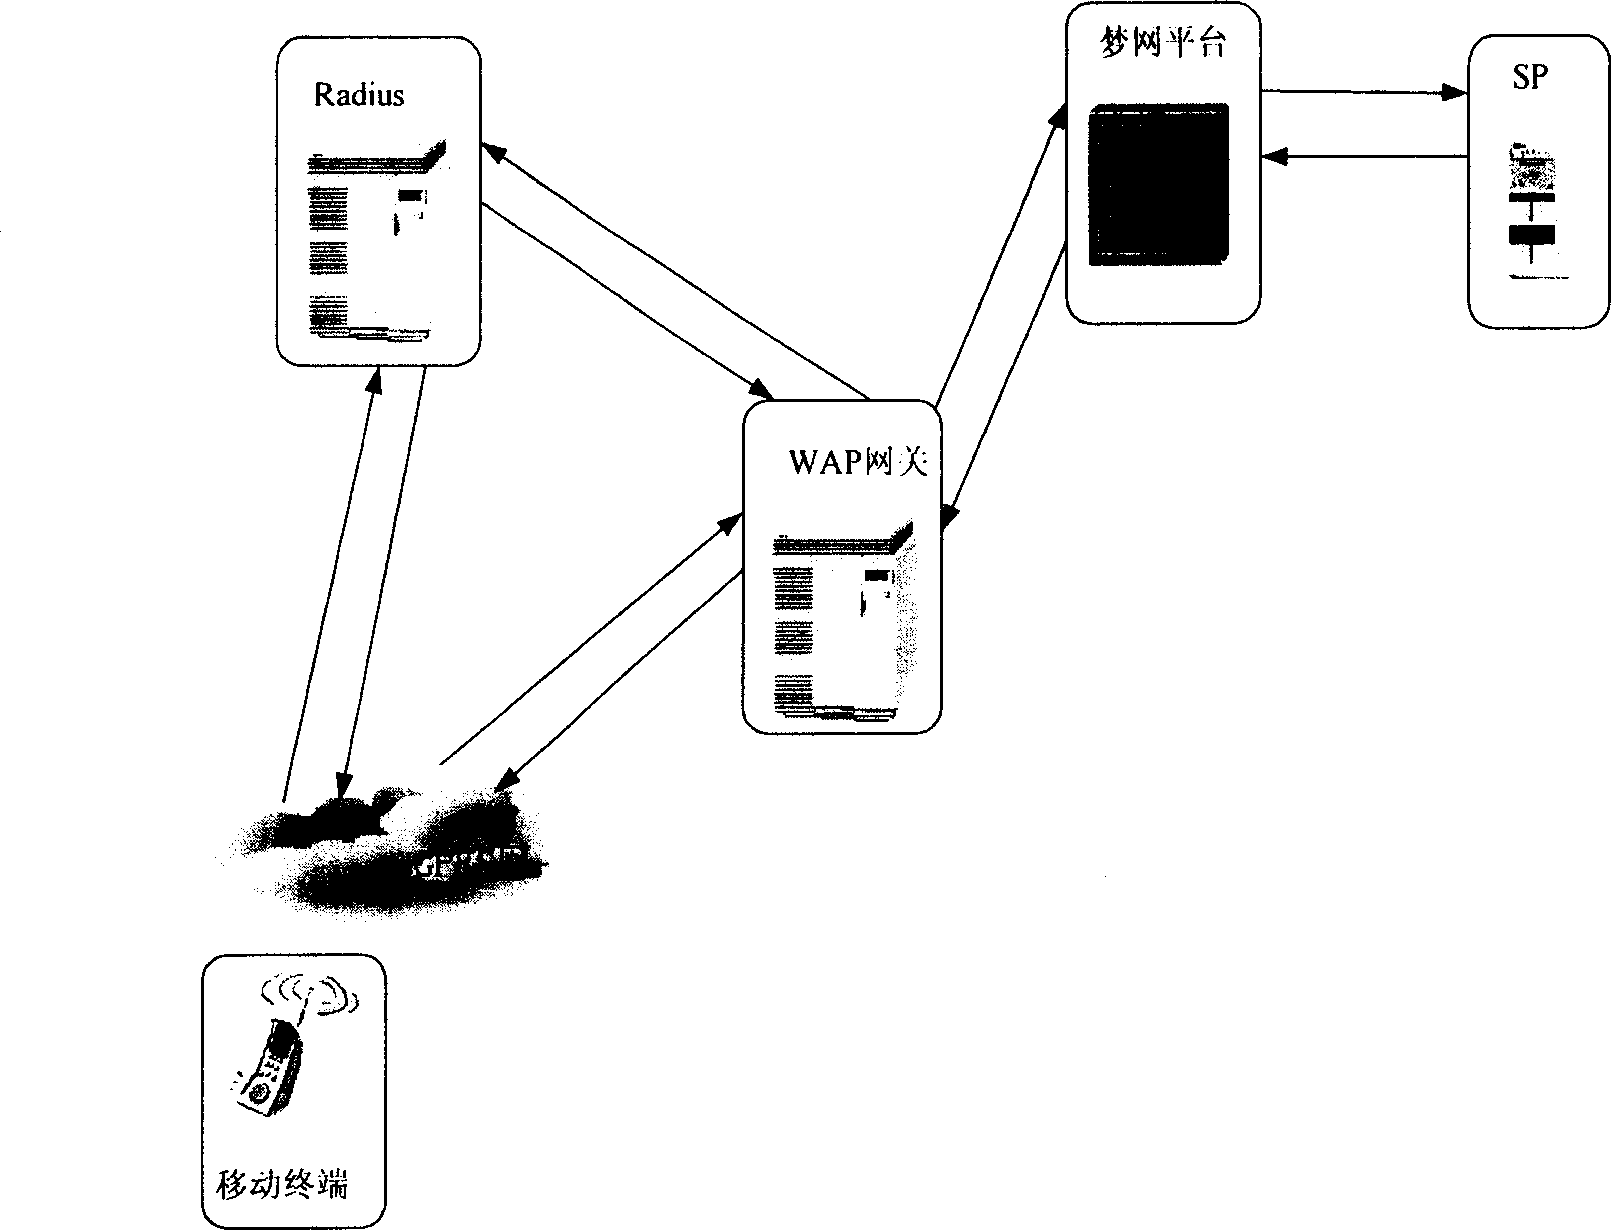 Multiple interface multiple protocol detecting method based on WAP/MMS service